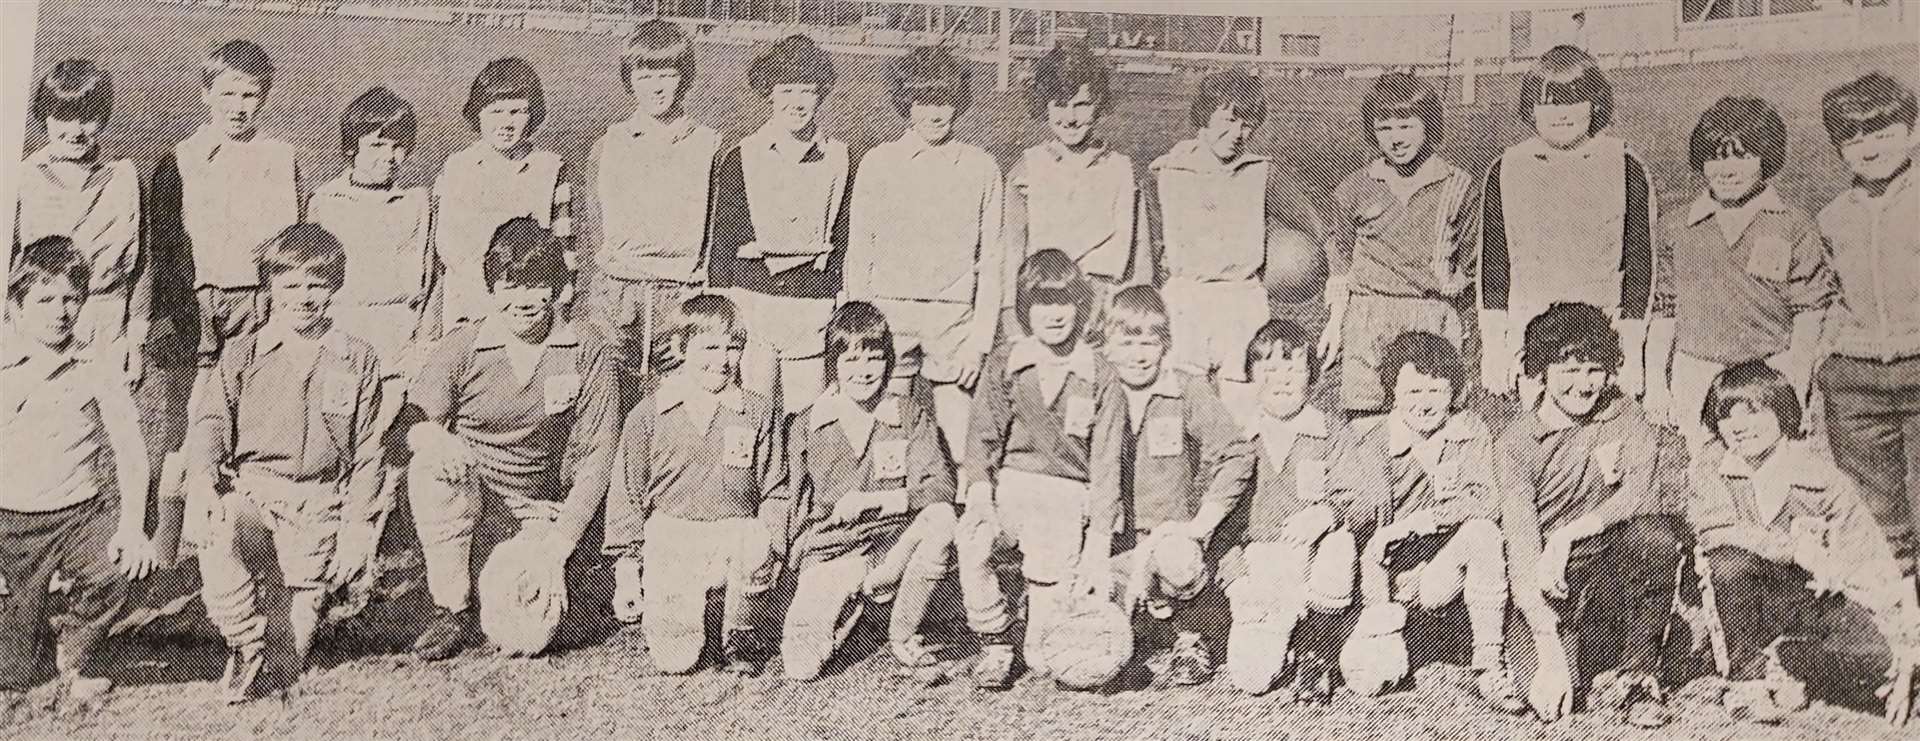 Kellands School and Inverurie Boys' Brigade football teams went head to head (Inverurie Advertiser 1979)